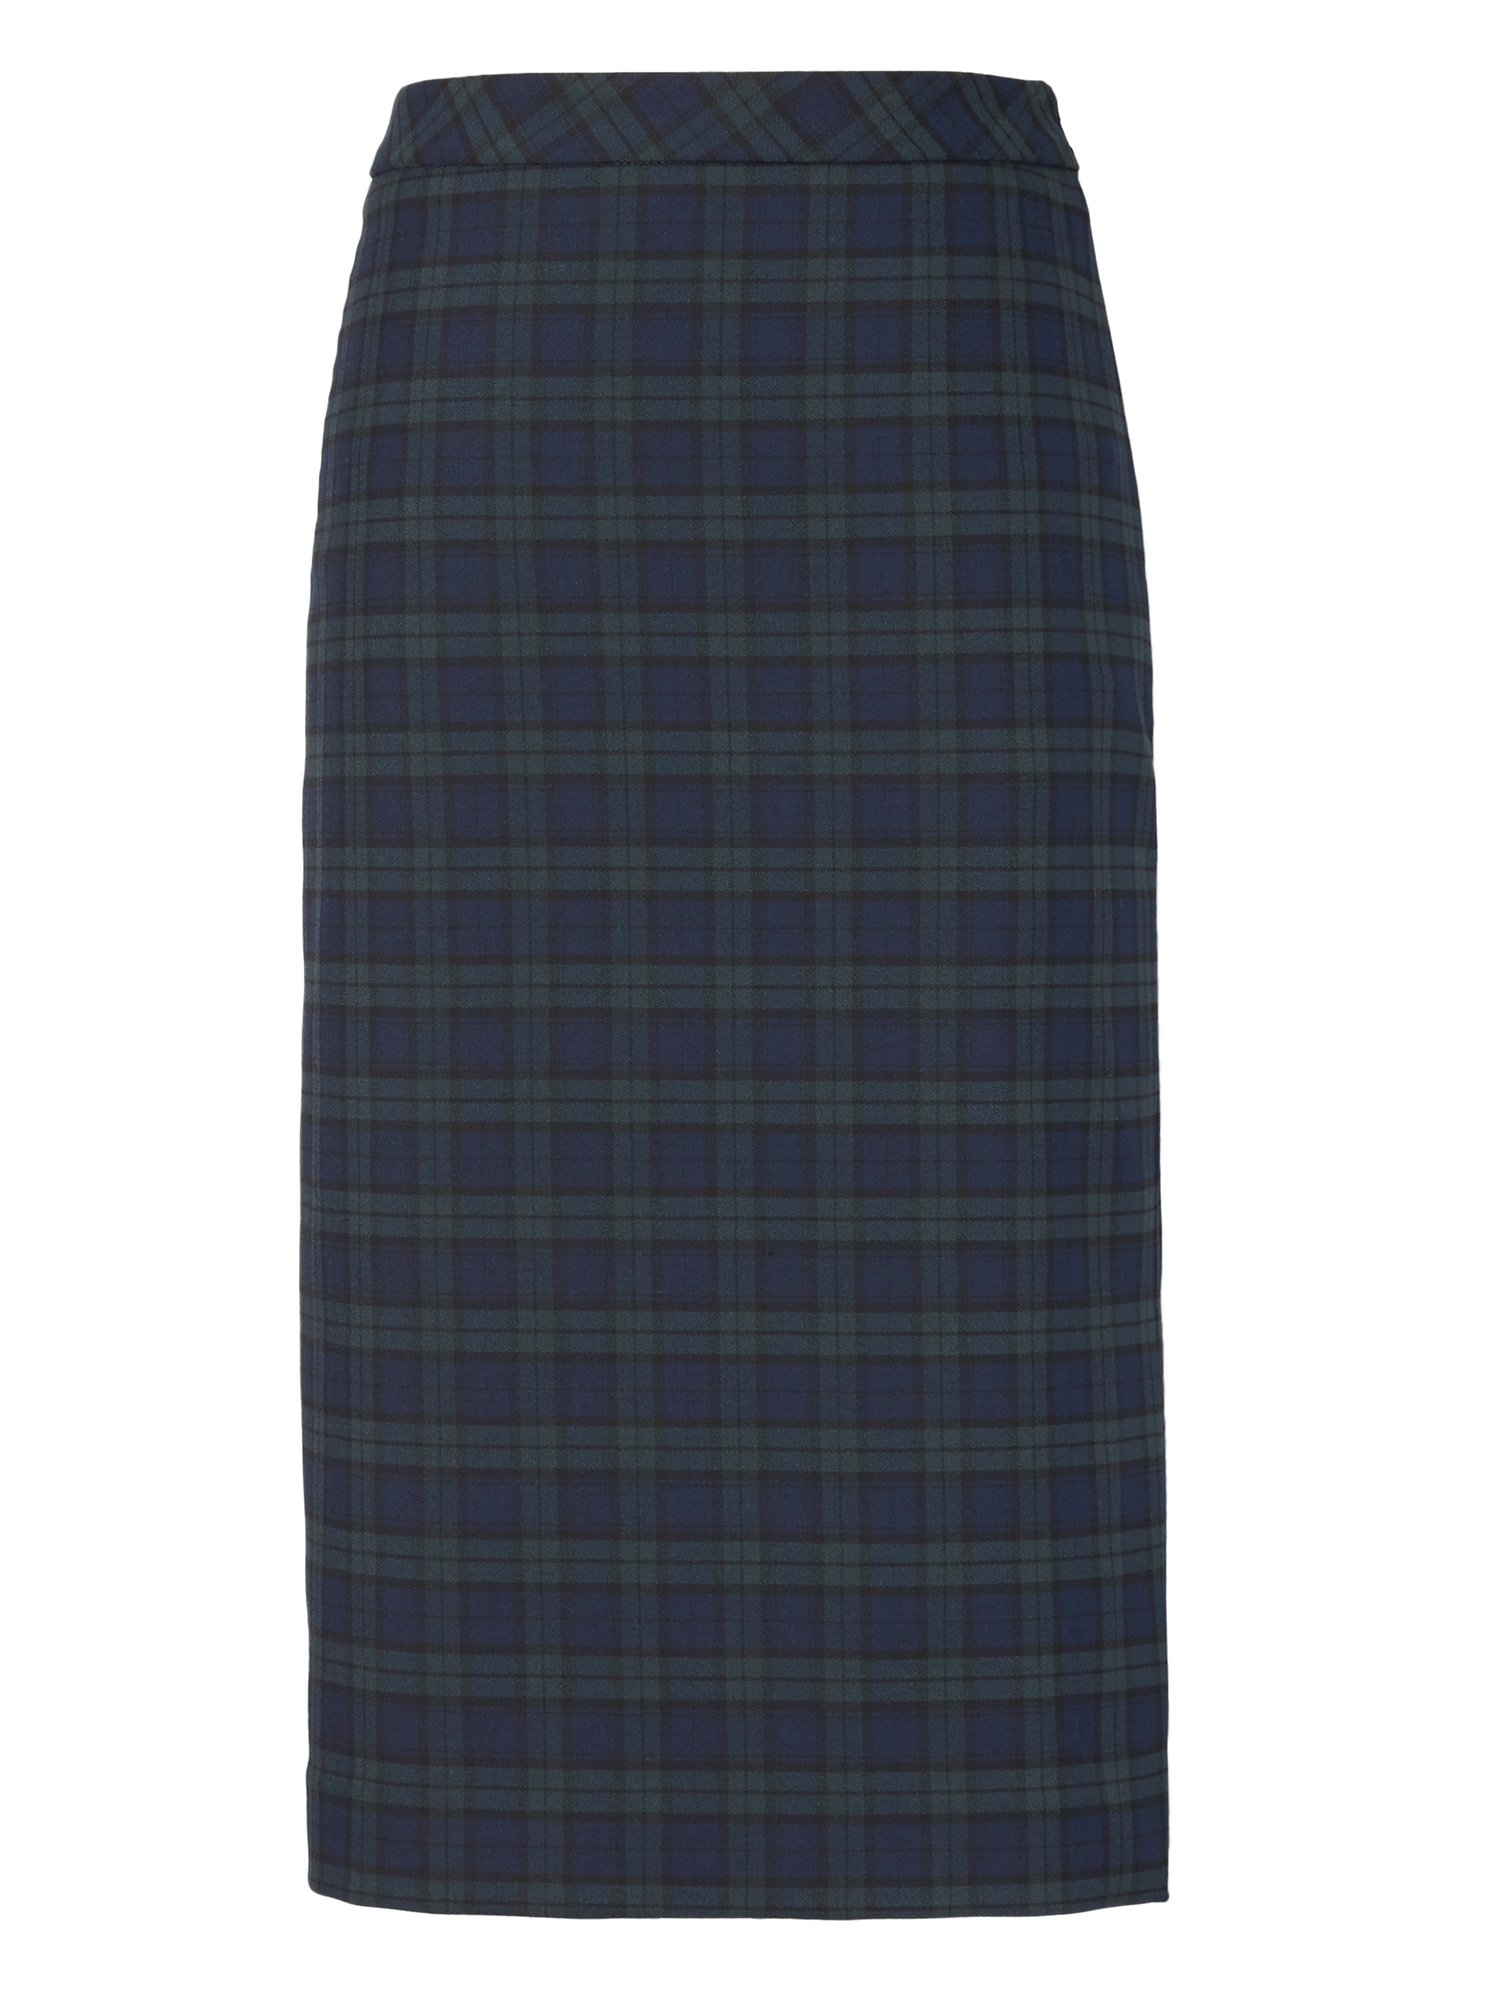 Tartan Plaid Pencil Skirt with Side Slit